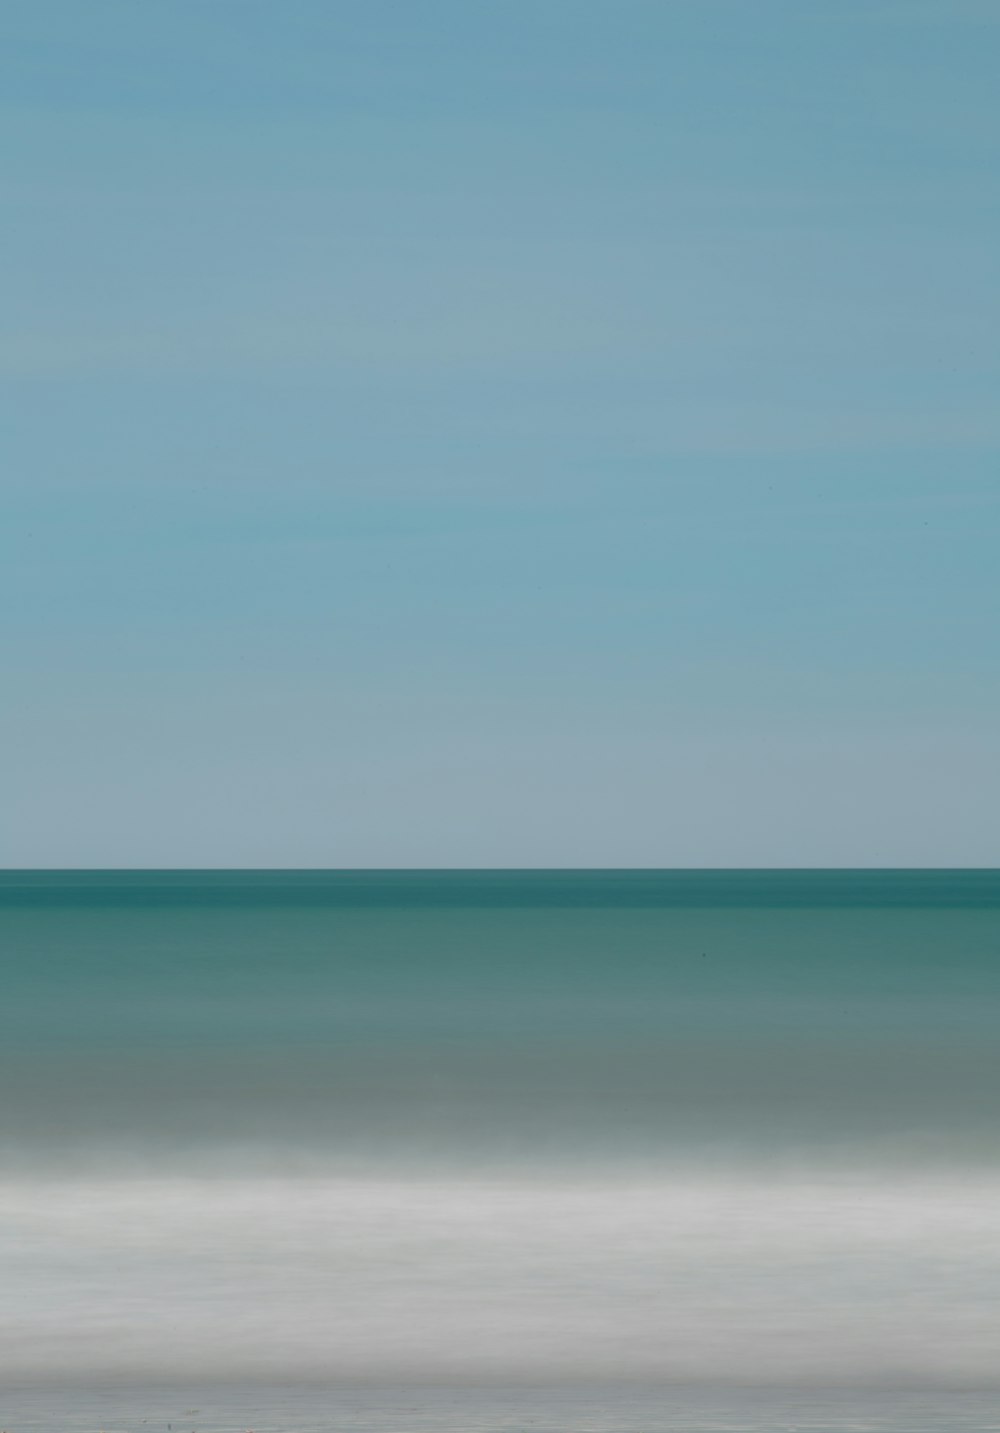 Una foto sfocata dell'oceano con una barca solitaria in lontananza